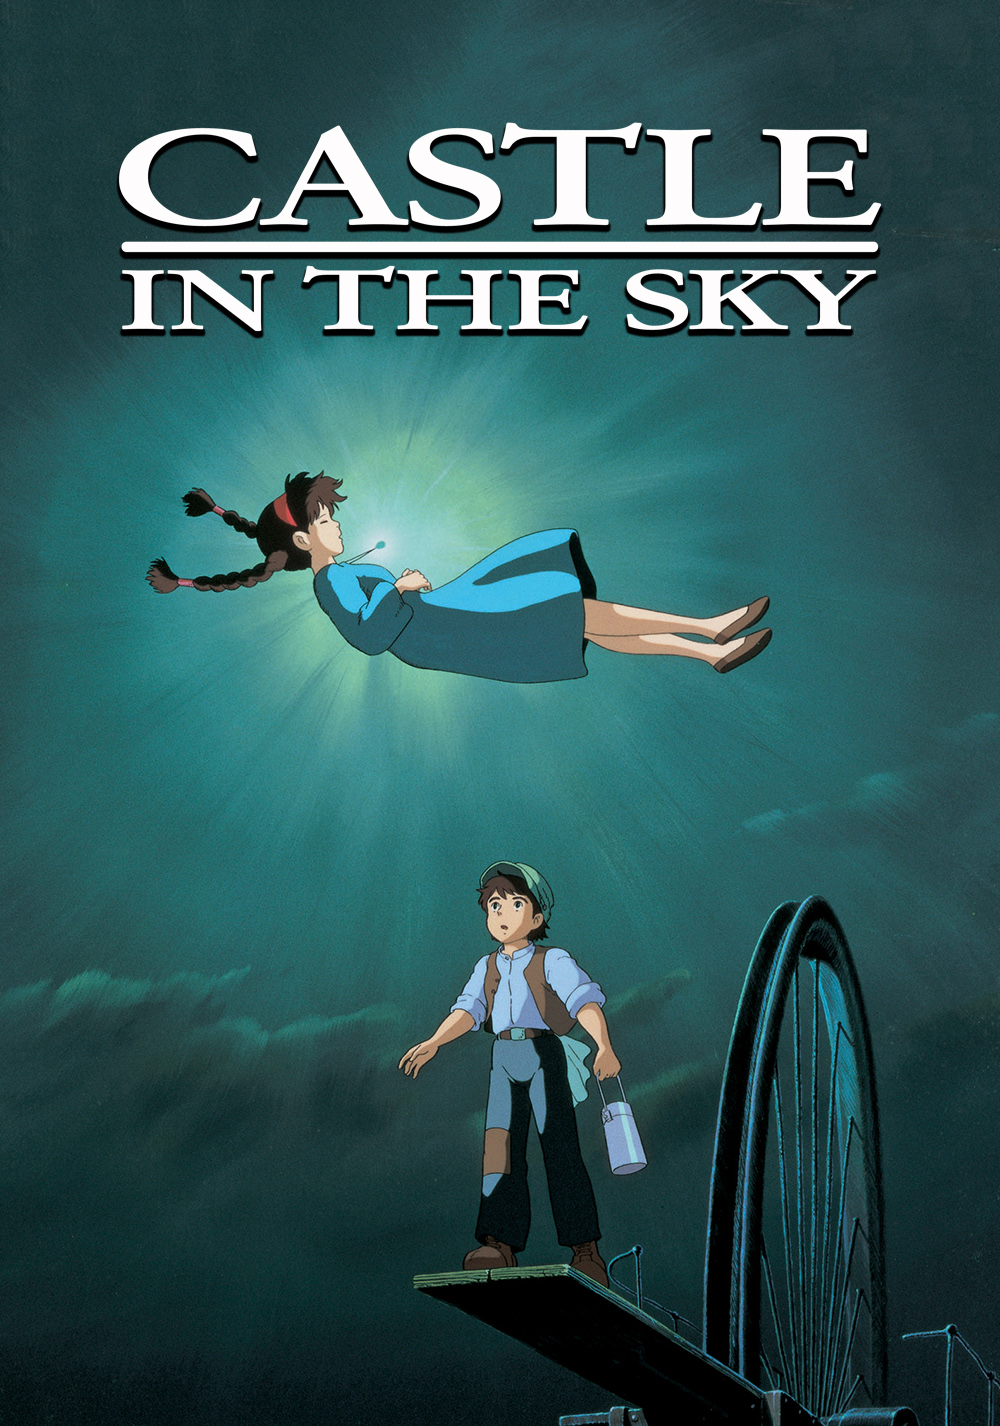 Studio Ghibli Laputa Castle in the Sky for Wind Orchestra Sheet Music Book 